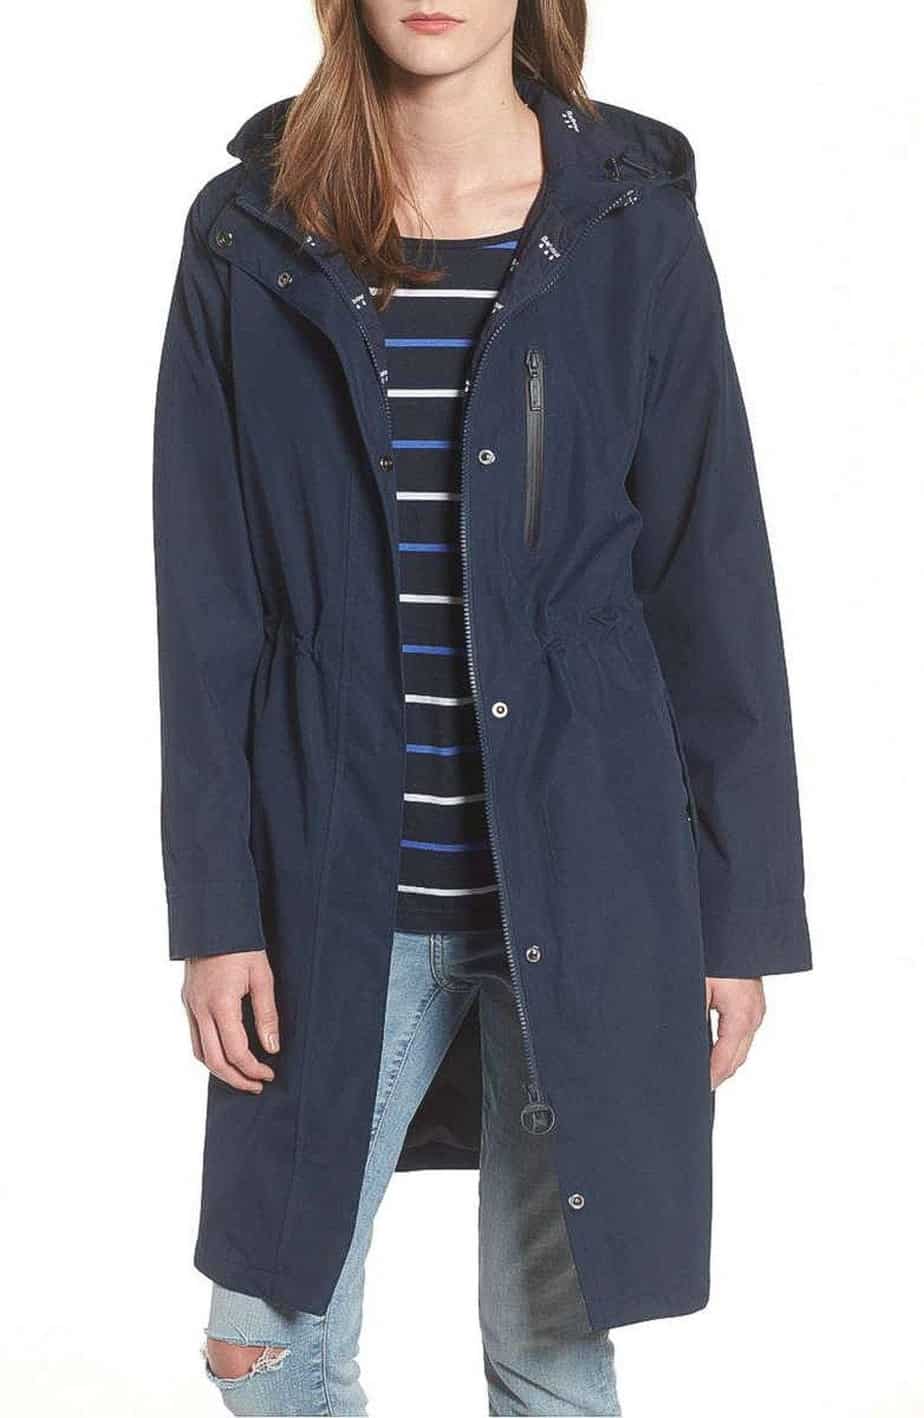 Ultimate list of spring and summer raincoats: Nordstrom Sleet Hooded Jacket